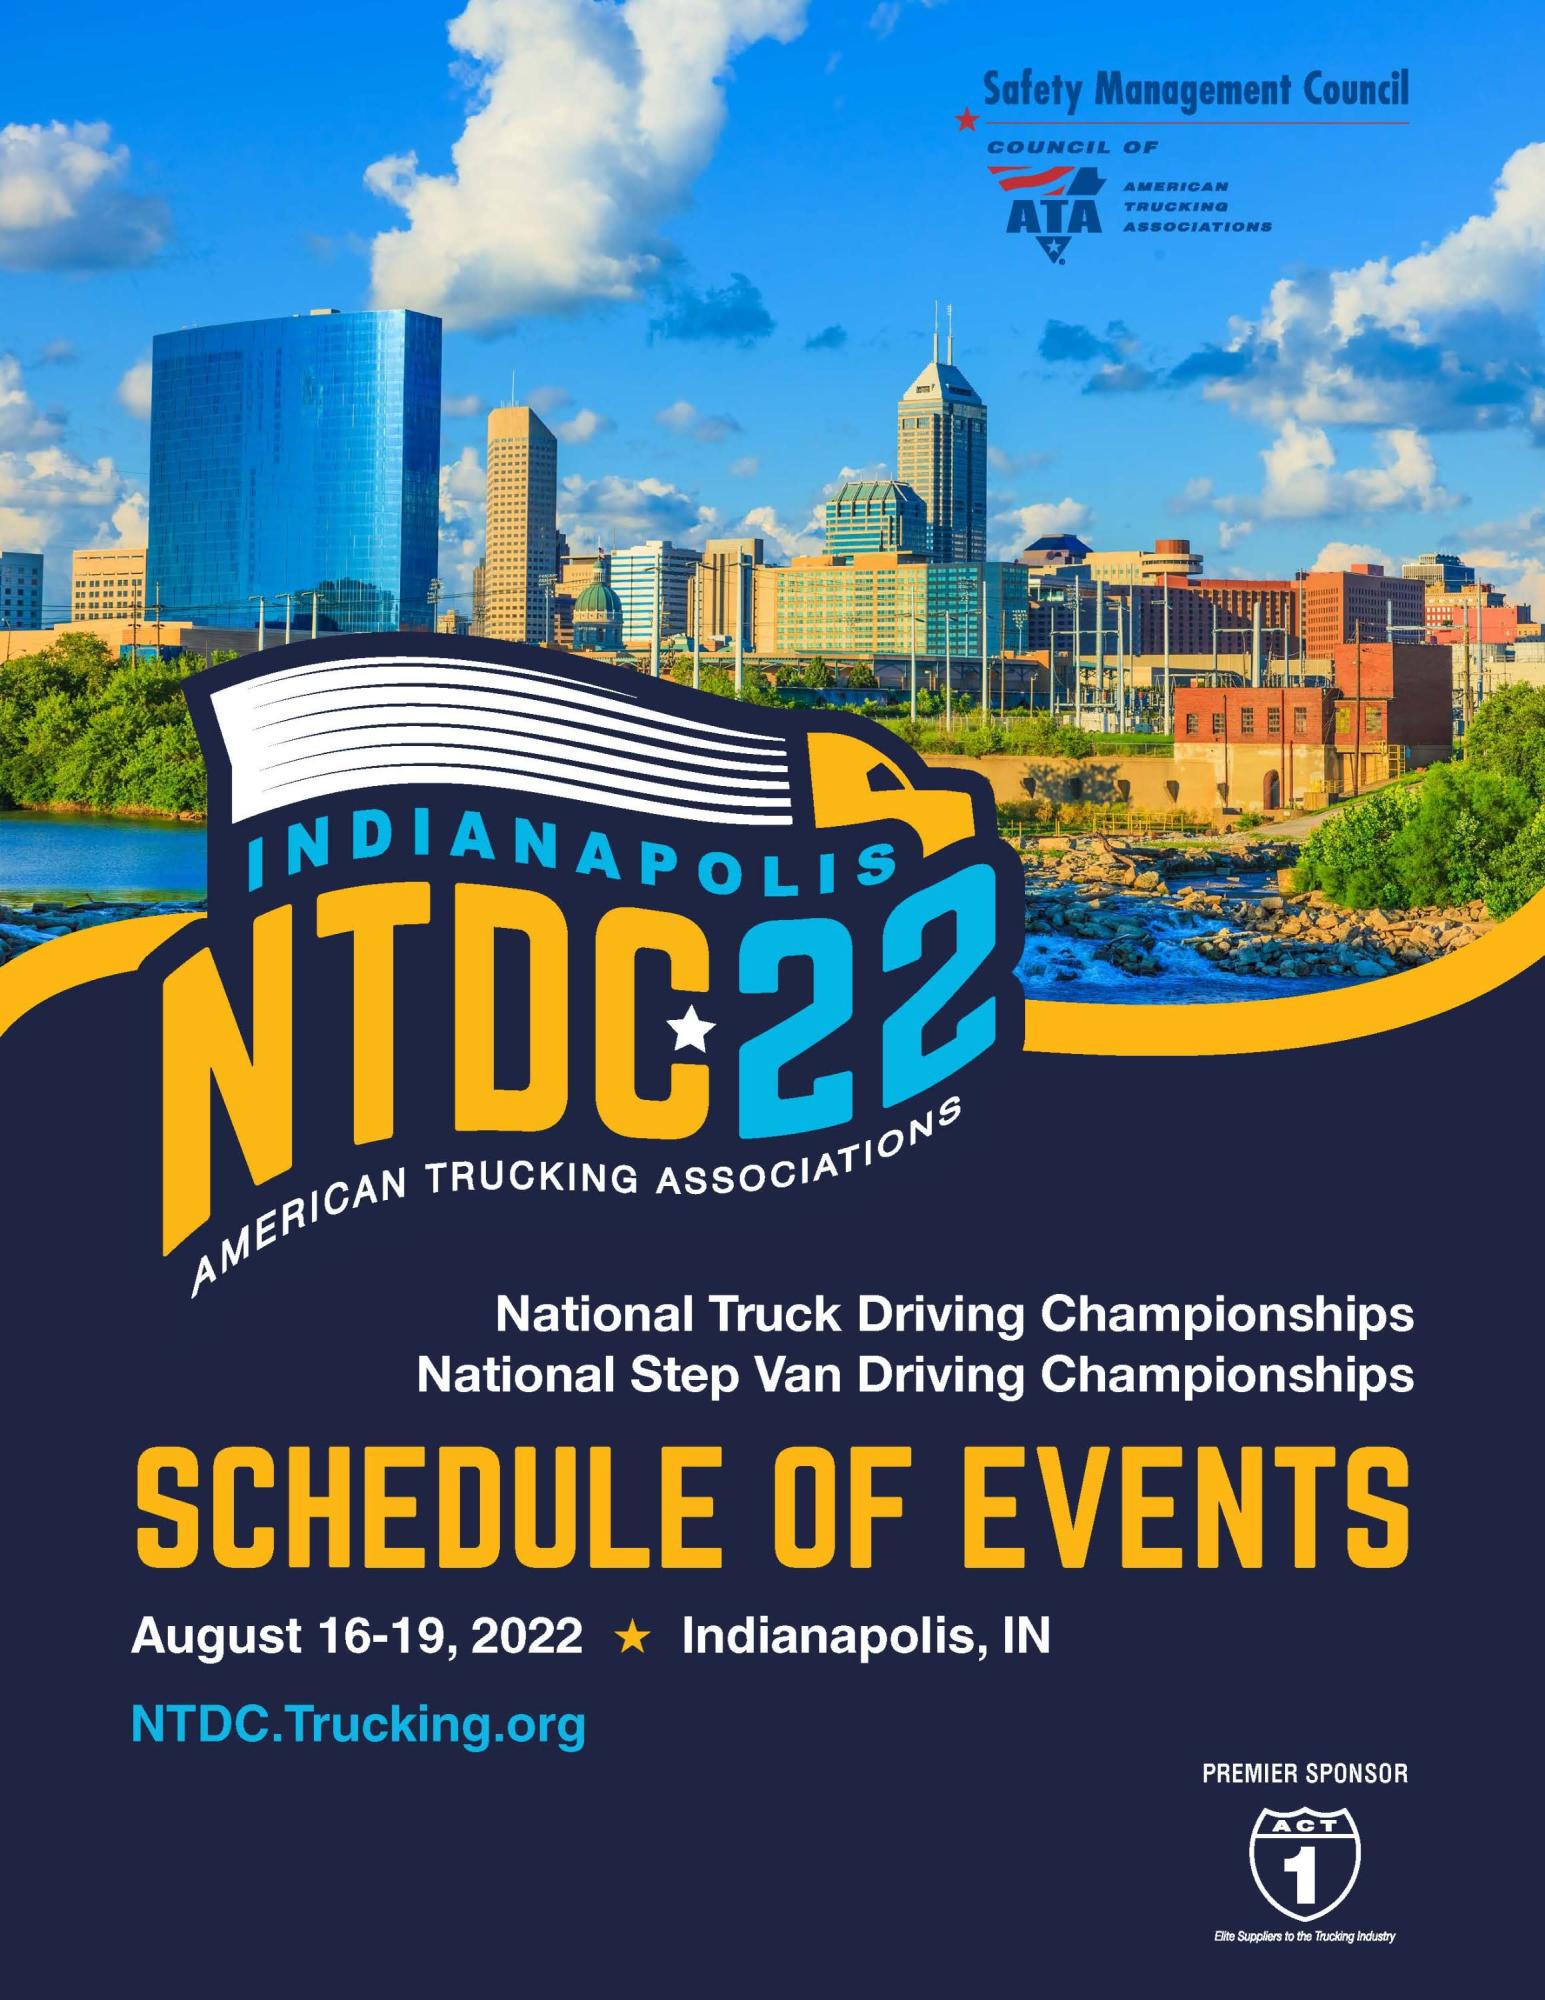 National Truck Driving Championships North Dakota Motor Carriers